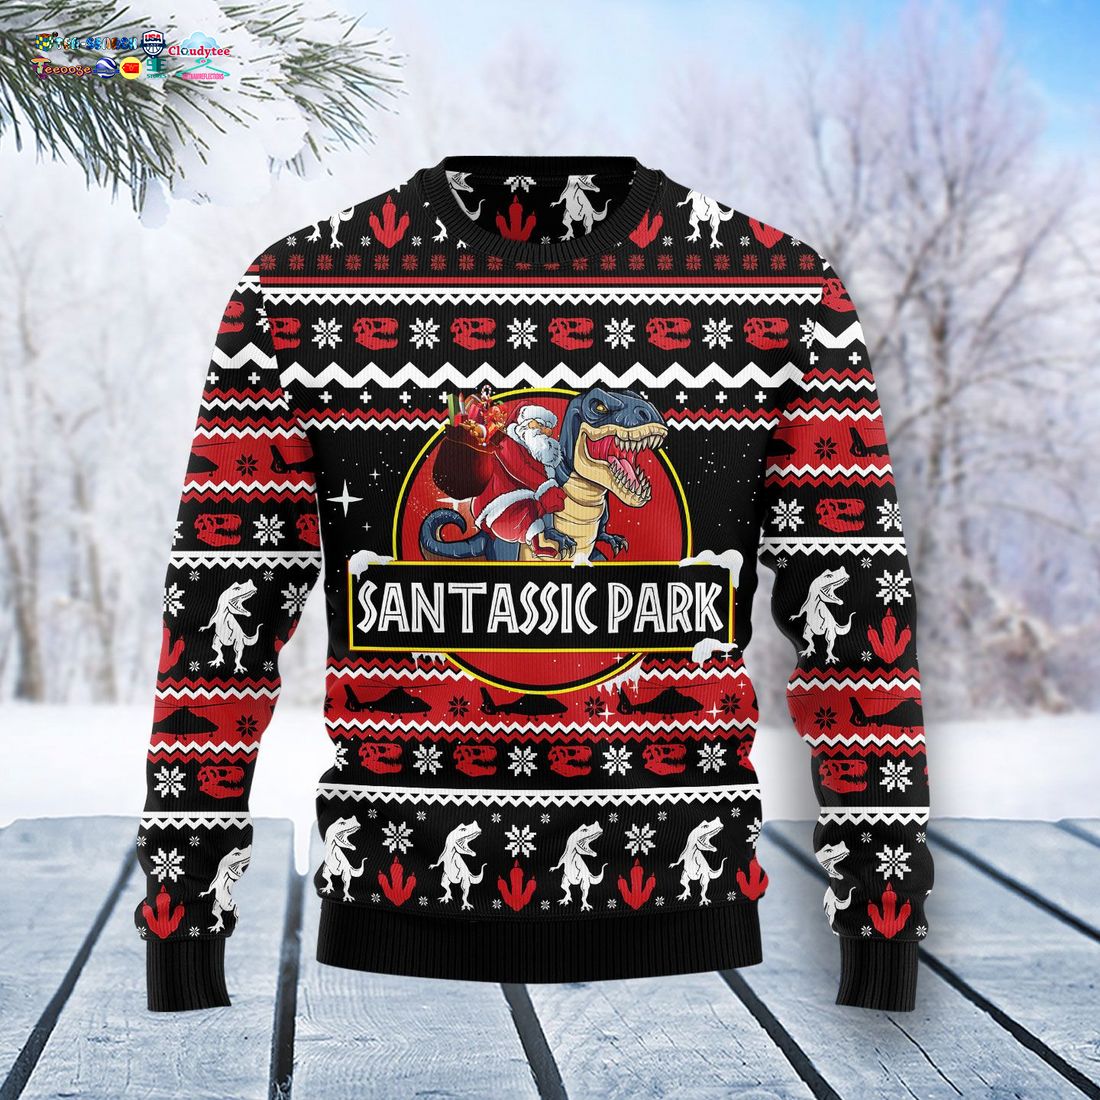 Santassic Park Ver 2 Ugly Christmas Sweater - Good look mam